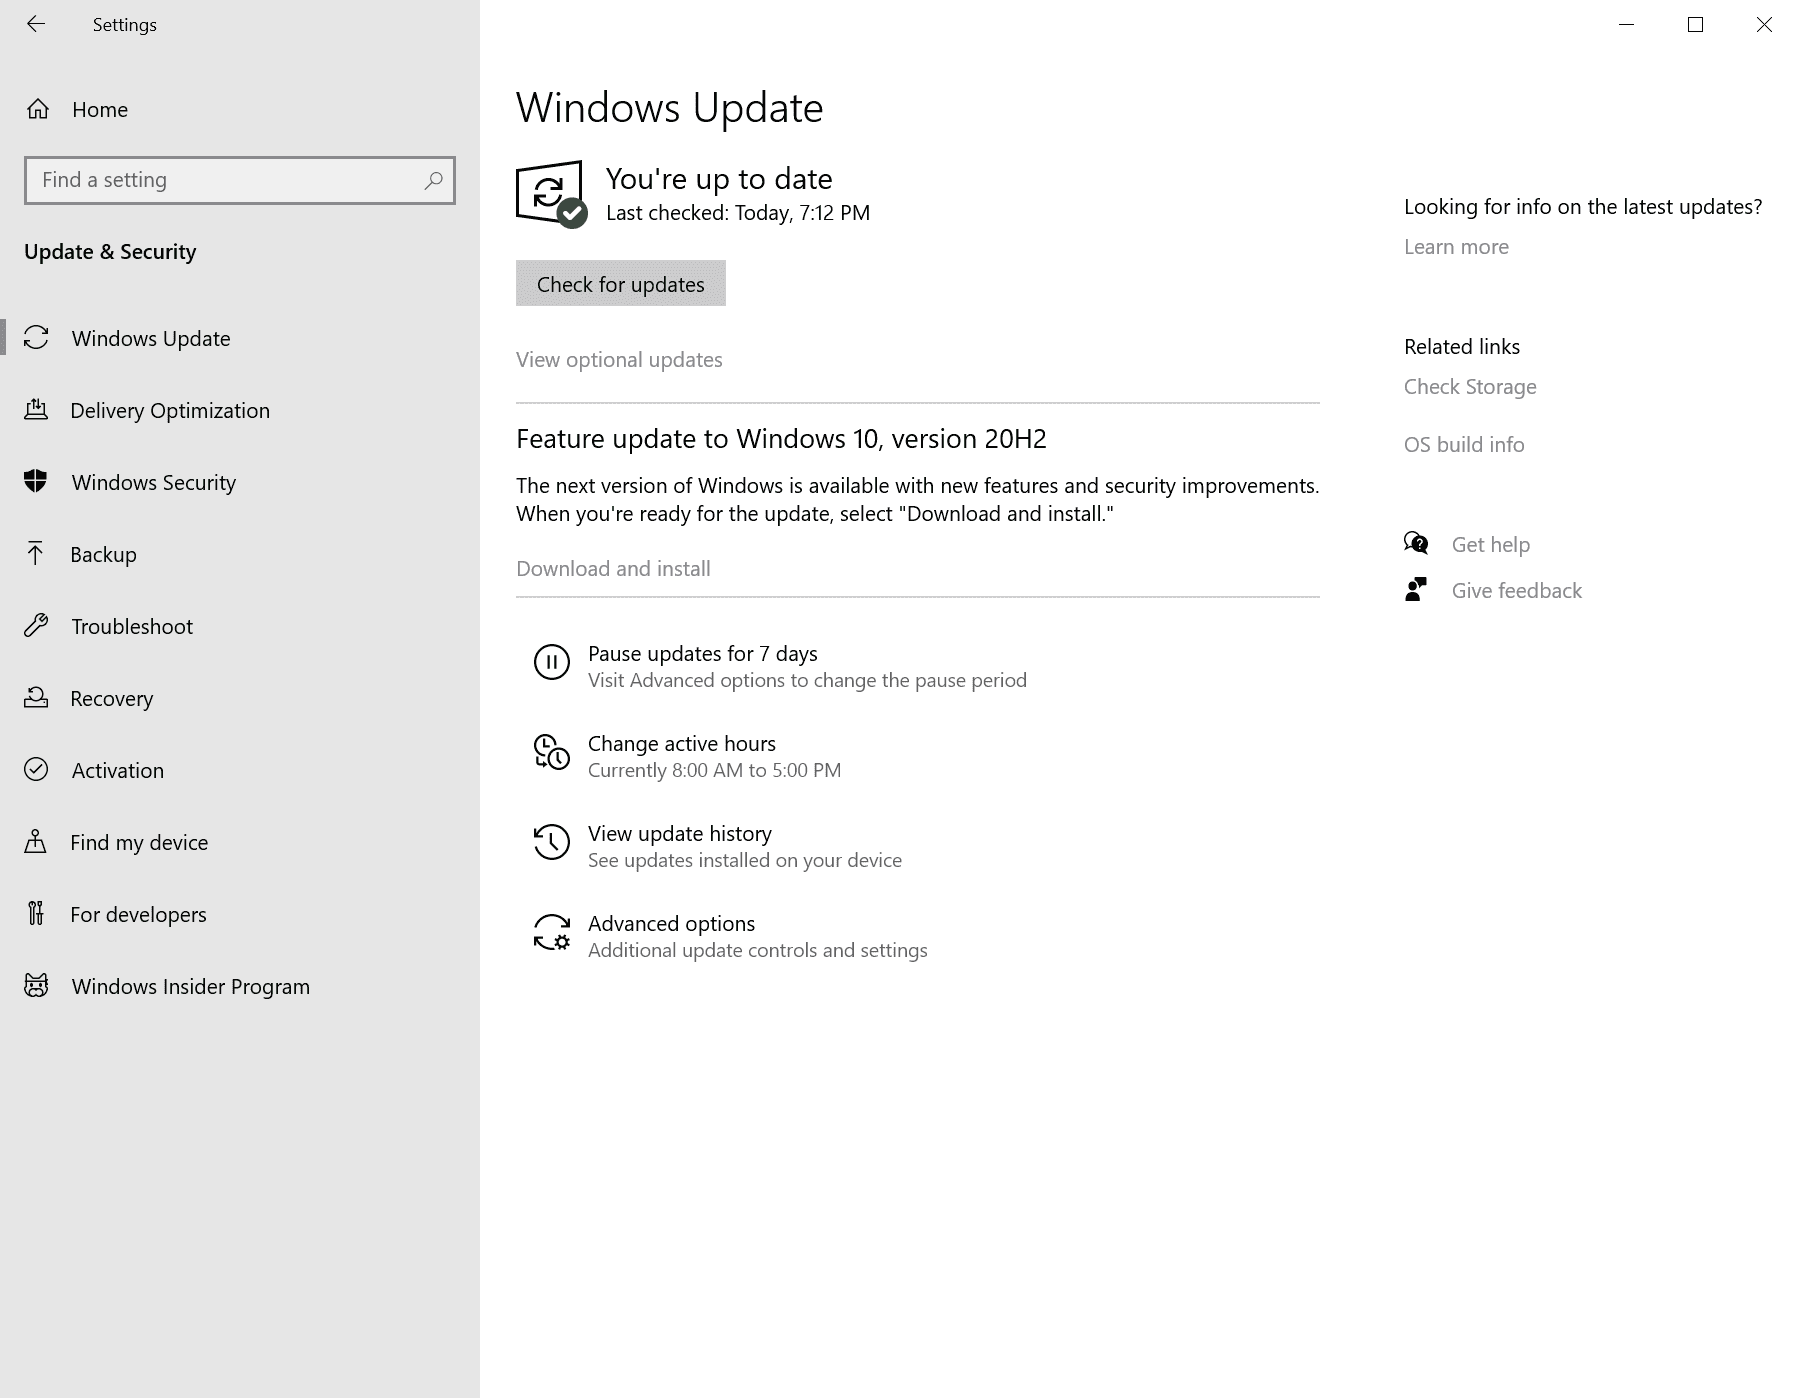 windows 10 version 20H2 feature update